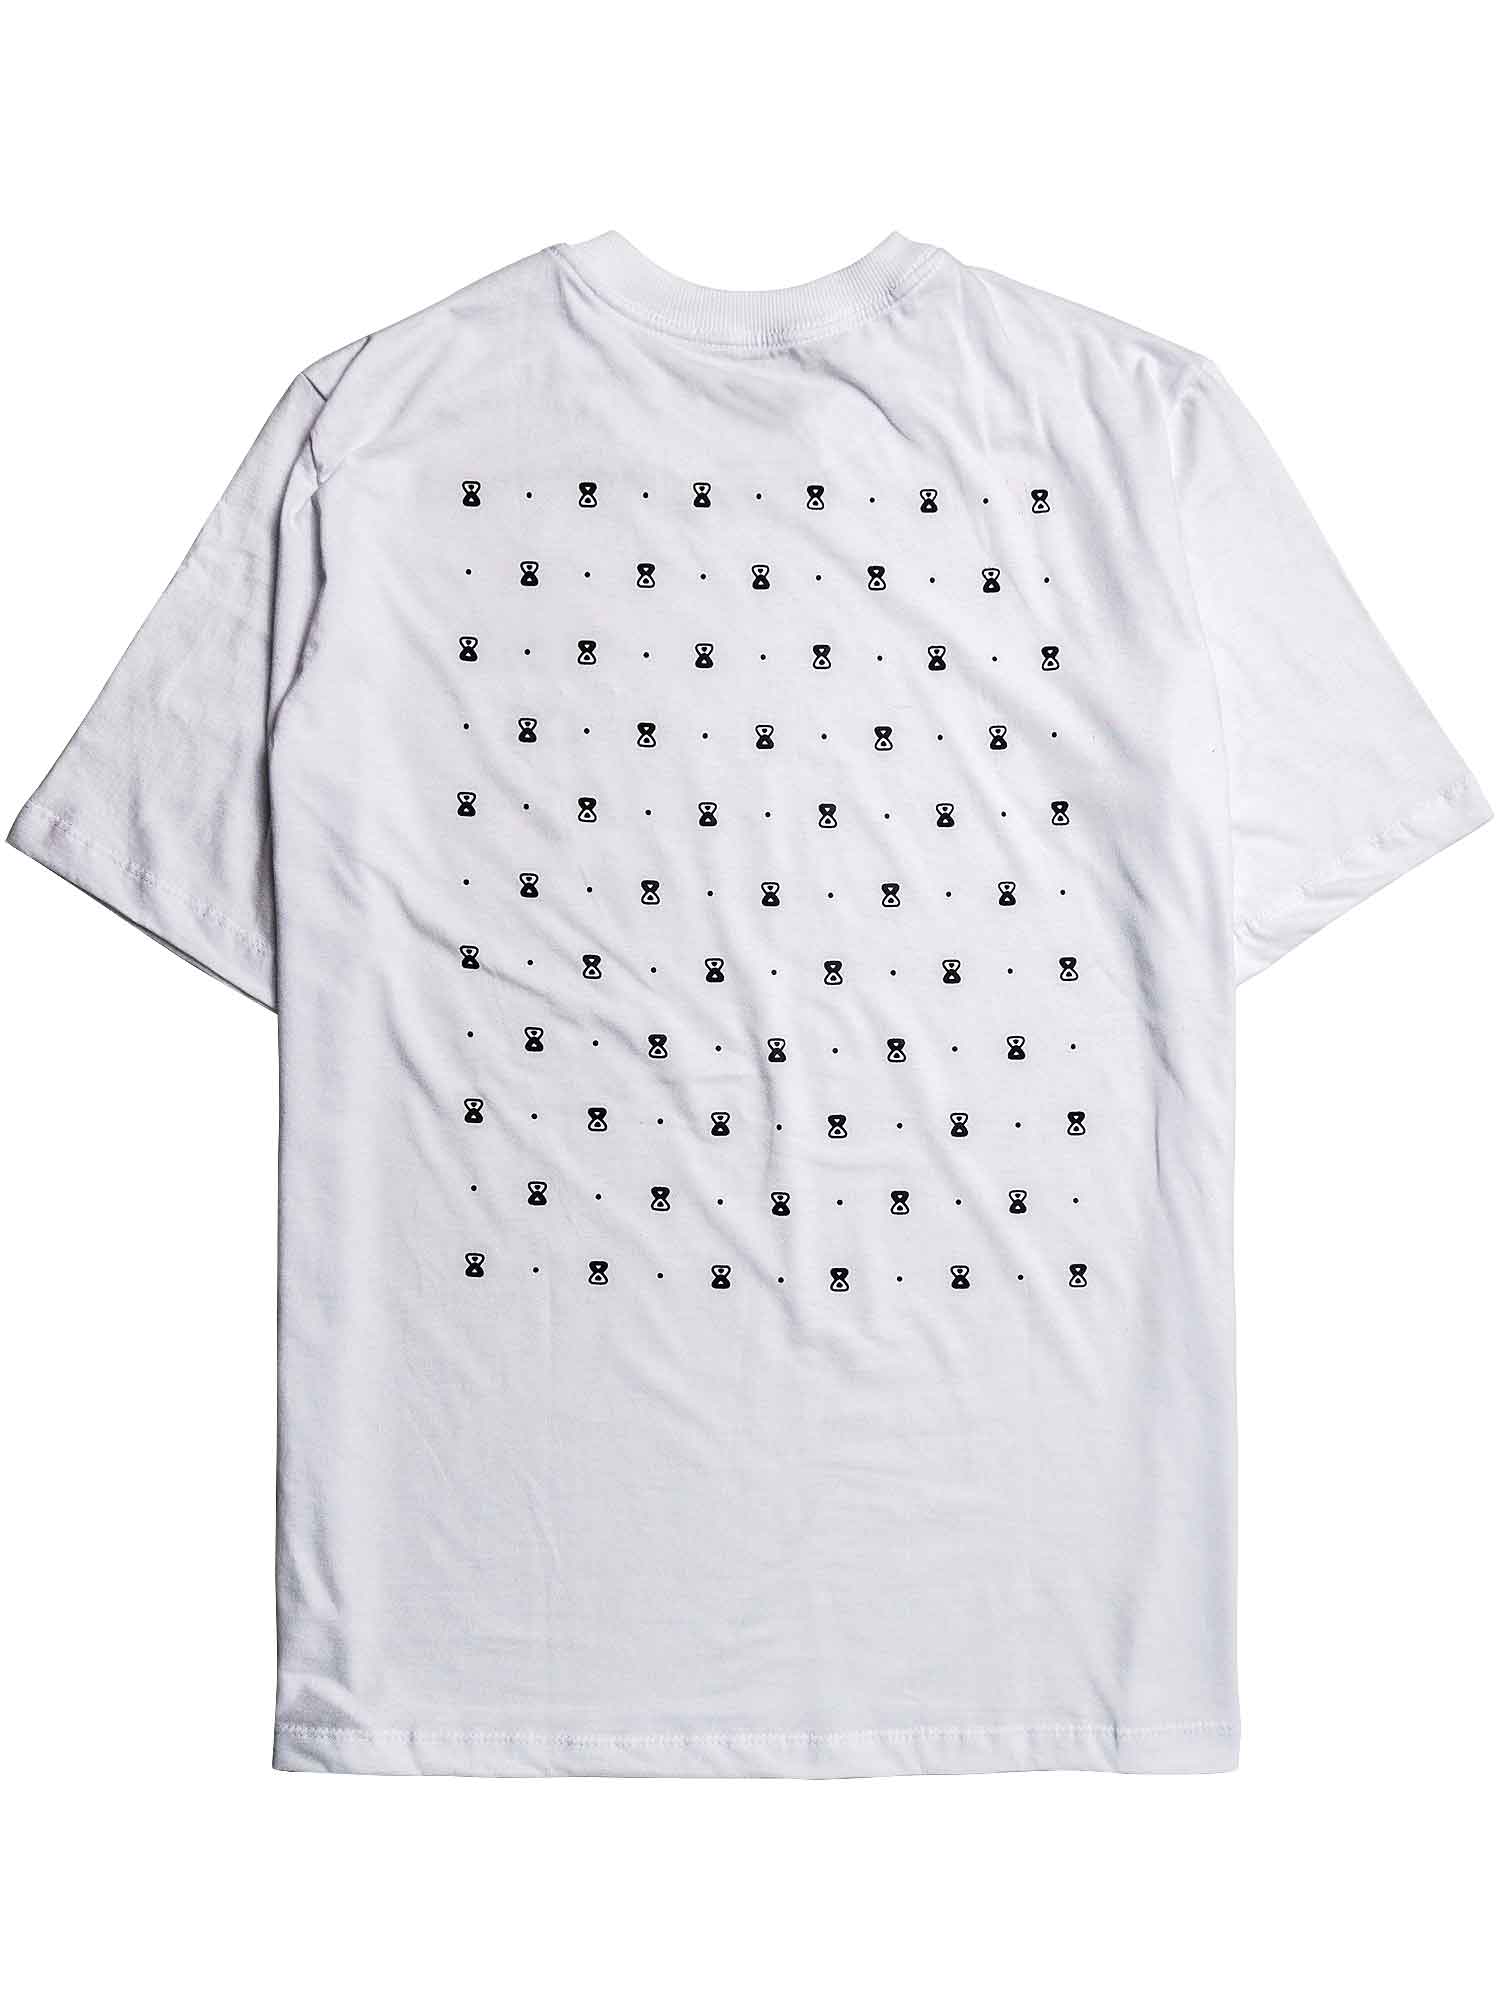 Camiseta-Future-Texturized-Branca-Costas